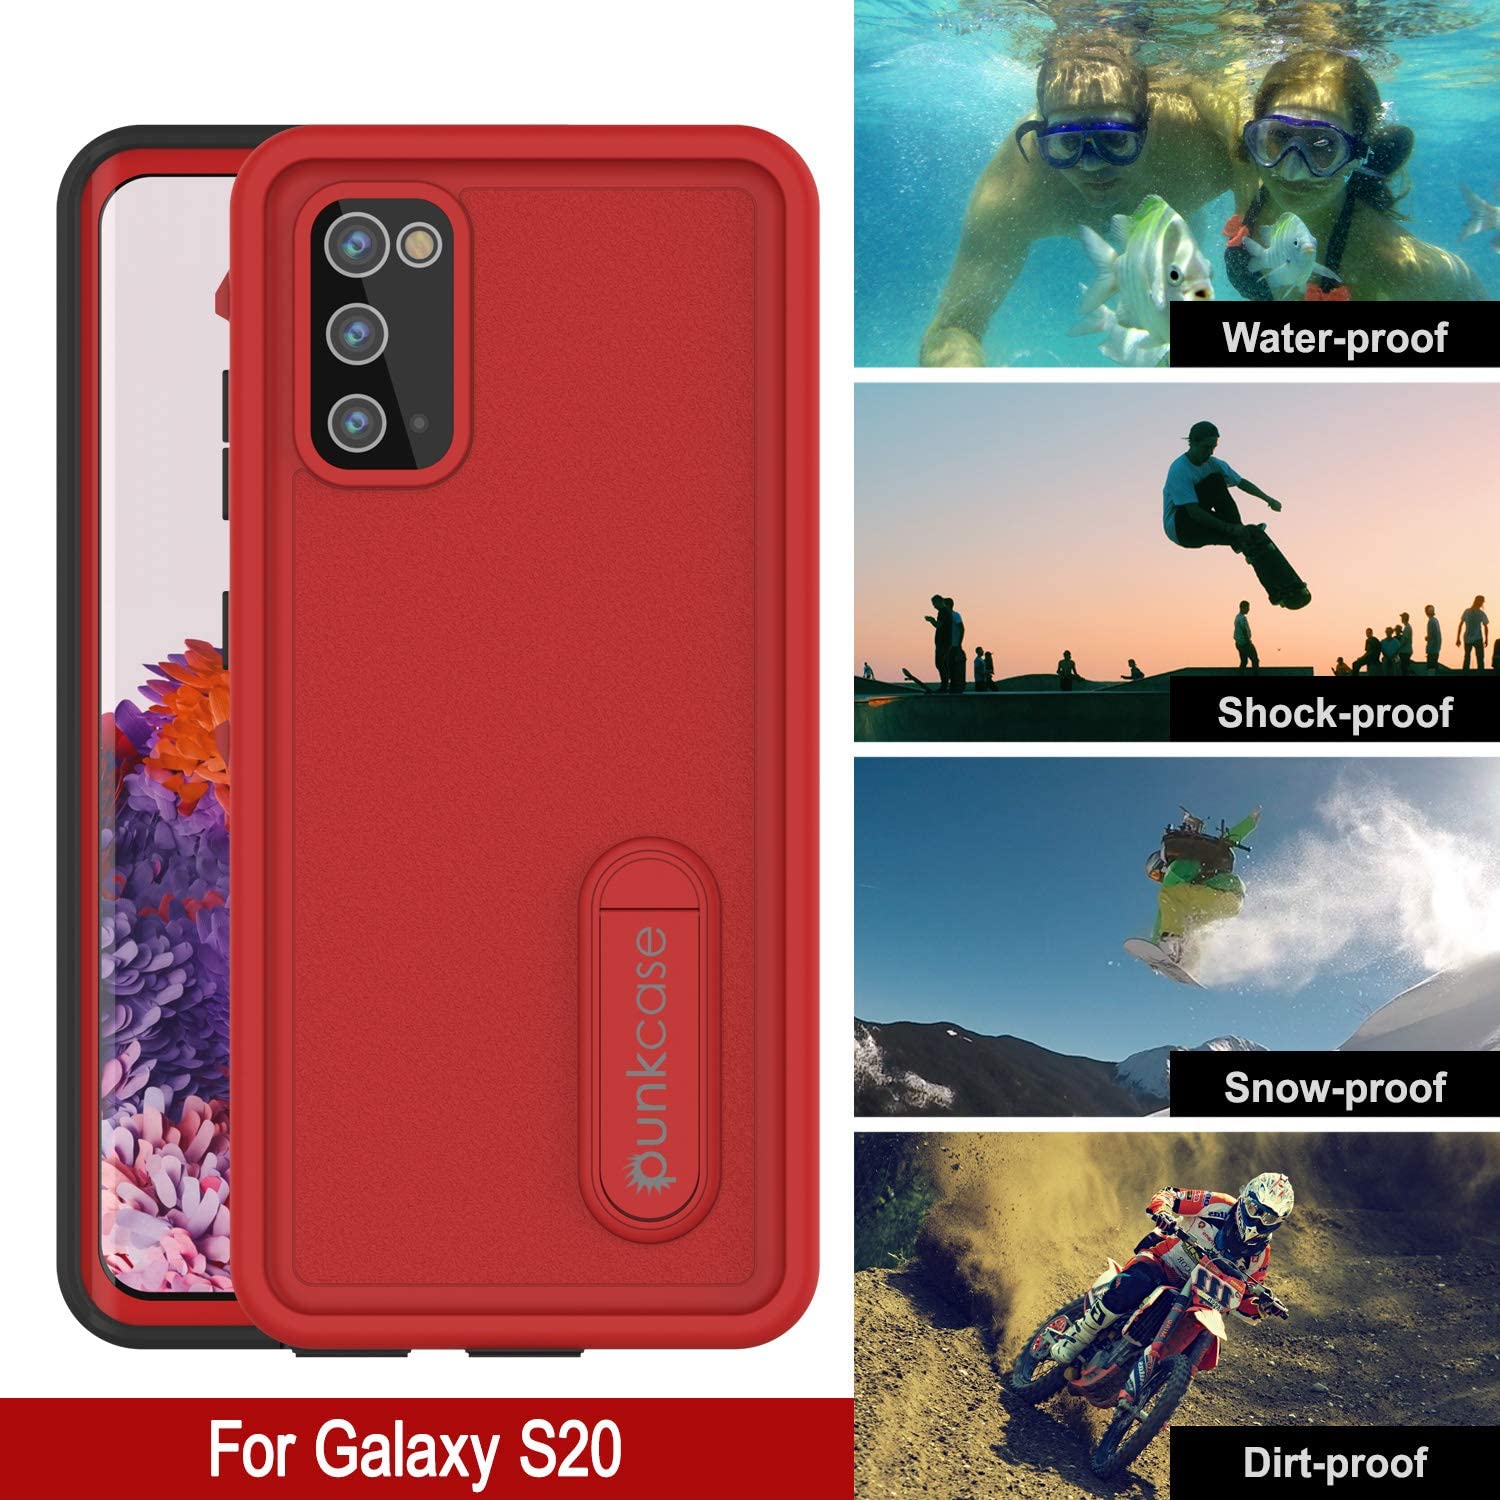 Galaxy S20 Waterproof Case, Punkcase [KickStud Series] Armor Cover [Red]